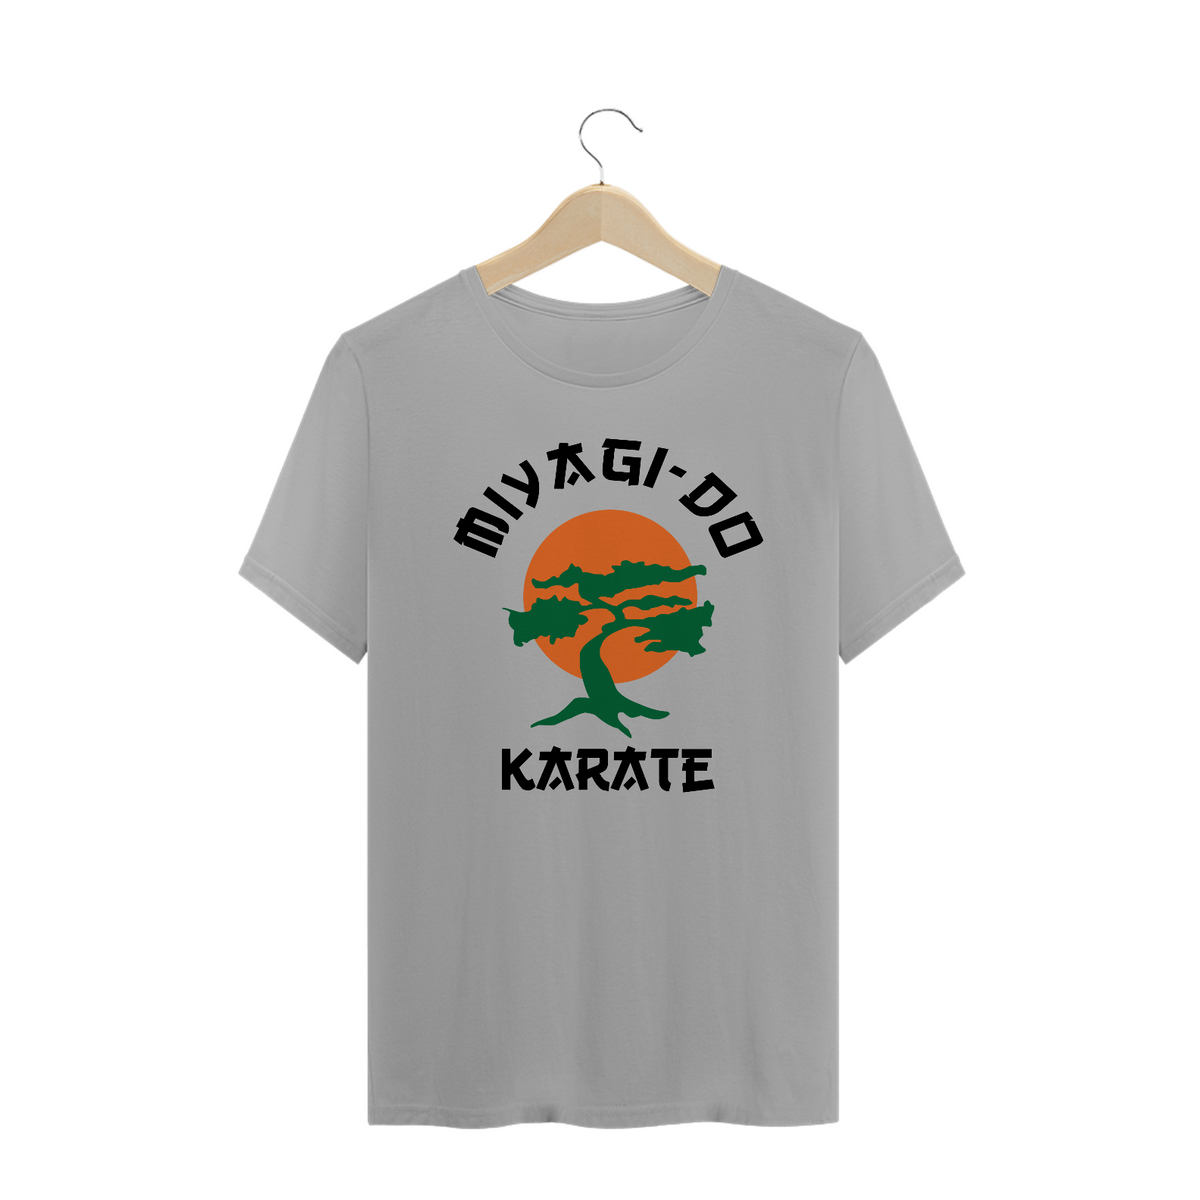 Nome do produto: Camiseta Miyagi-do Karate clara